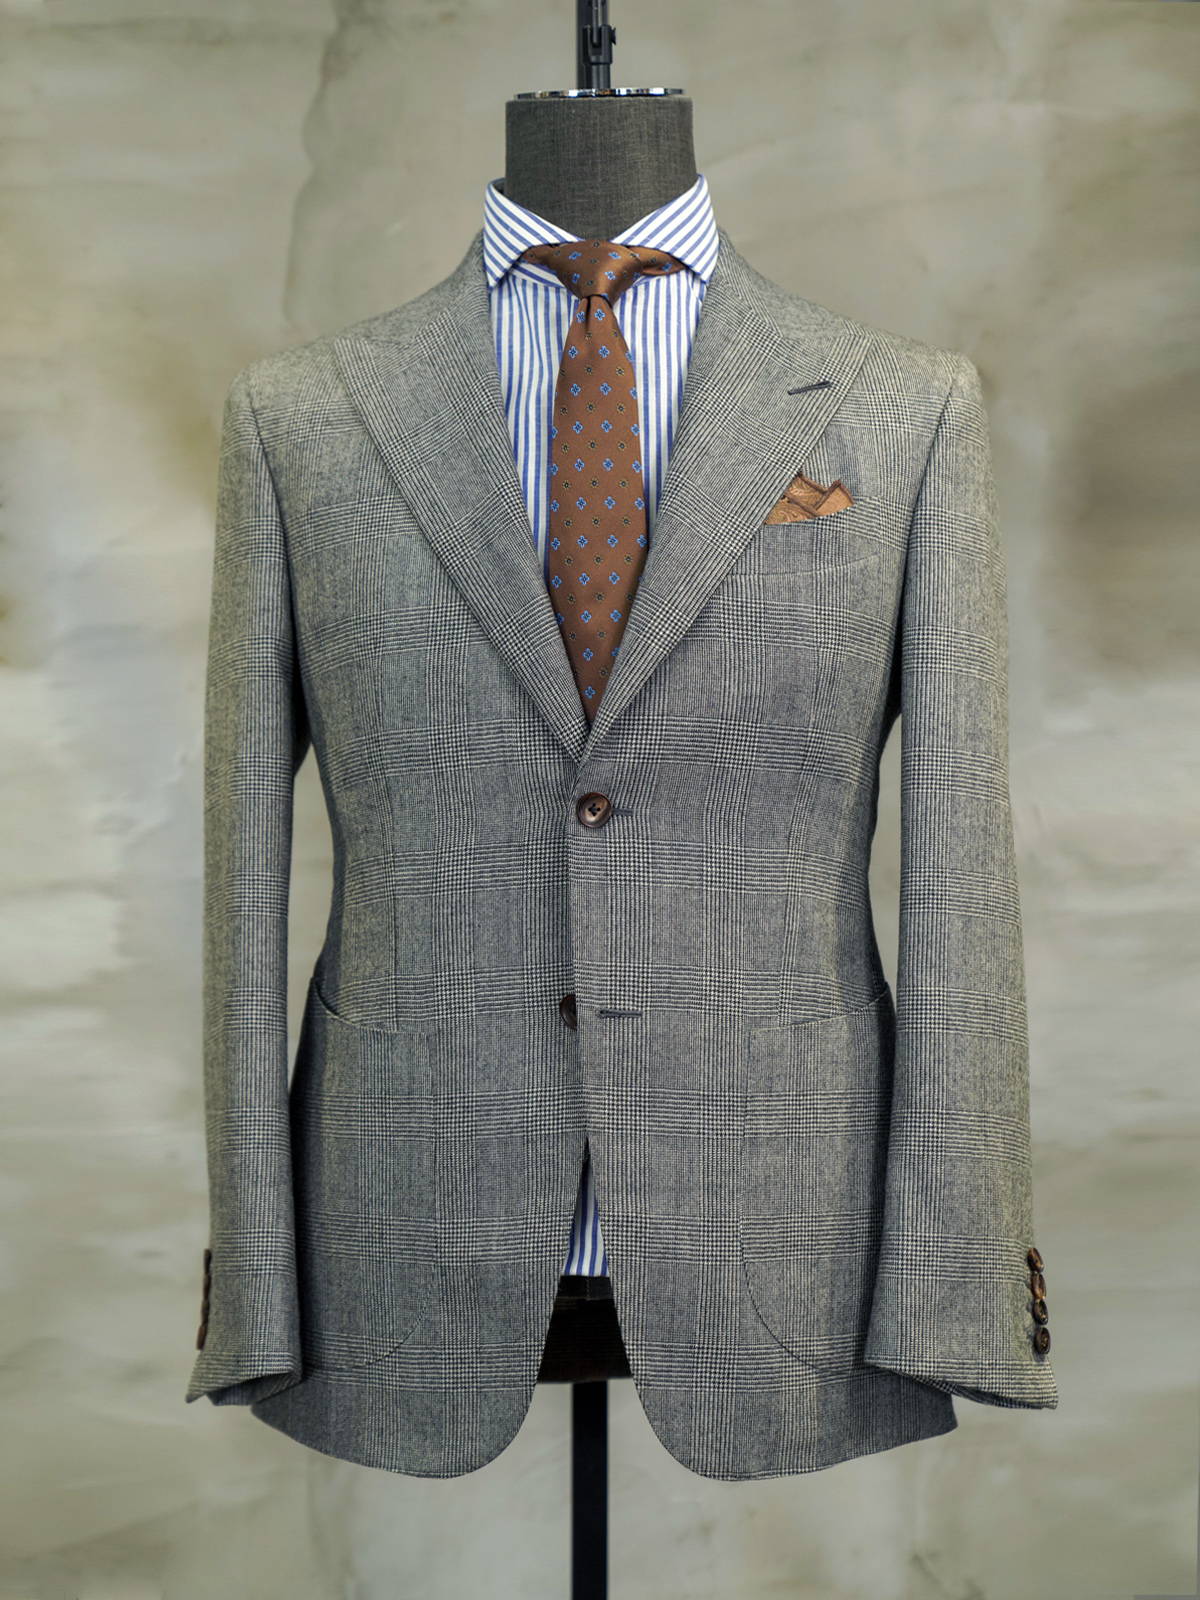 A Hand Tailored Suit - Cutting Custom Bespoke Hand Made Garments